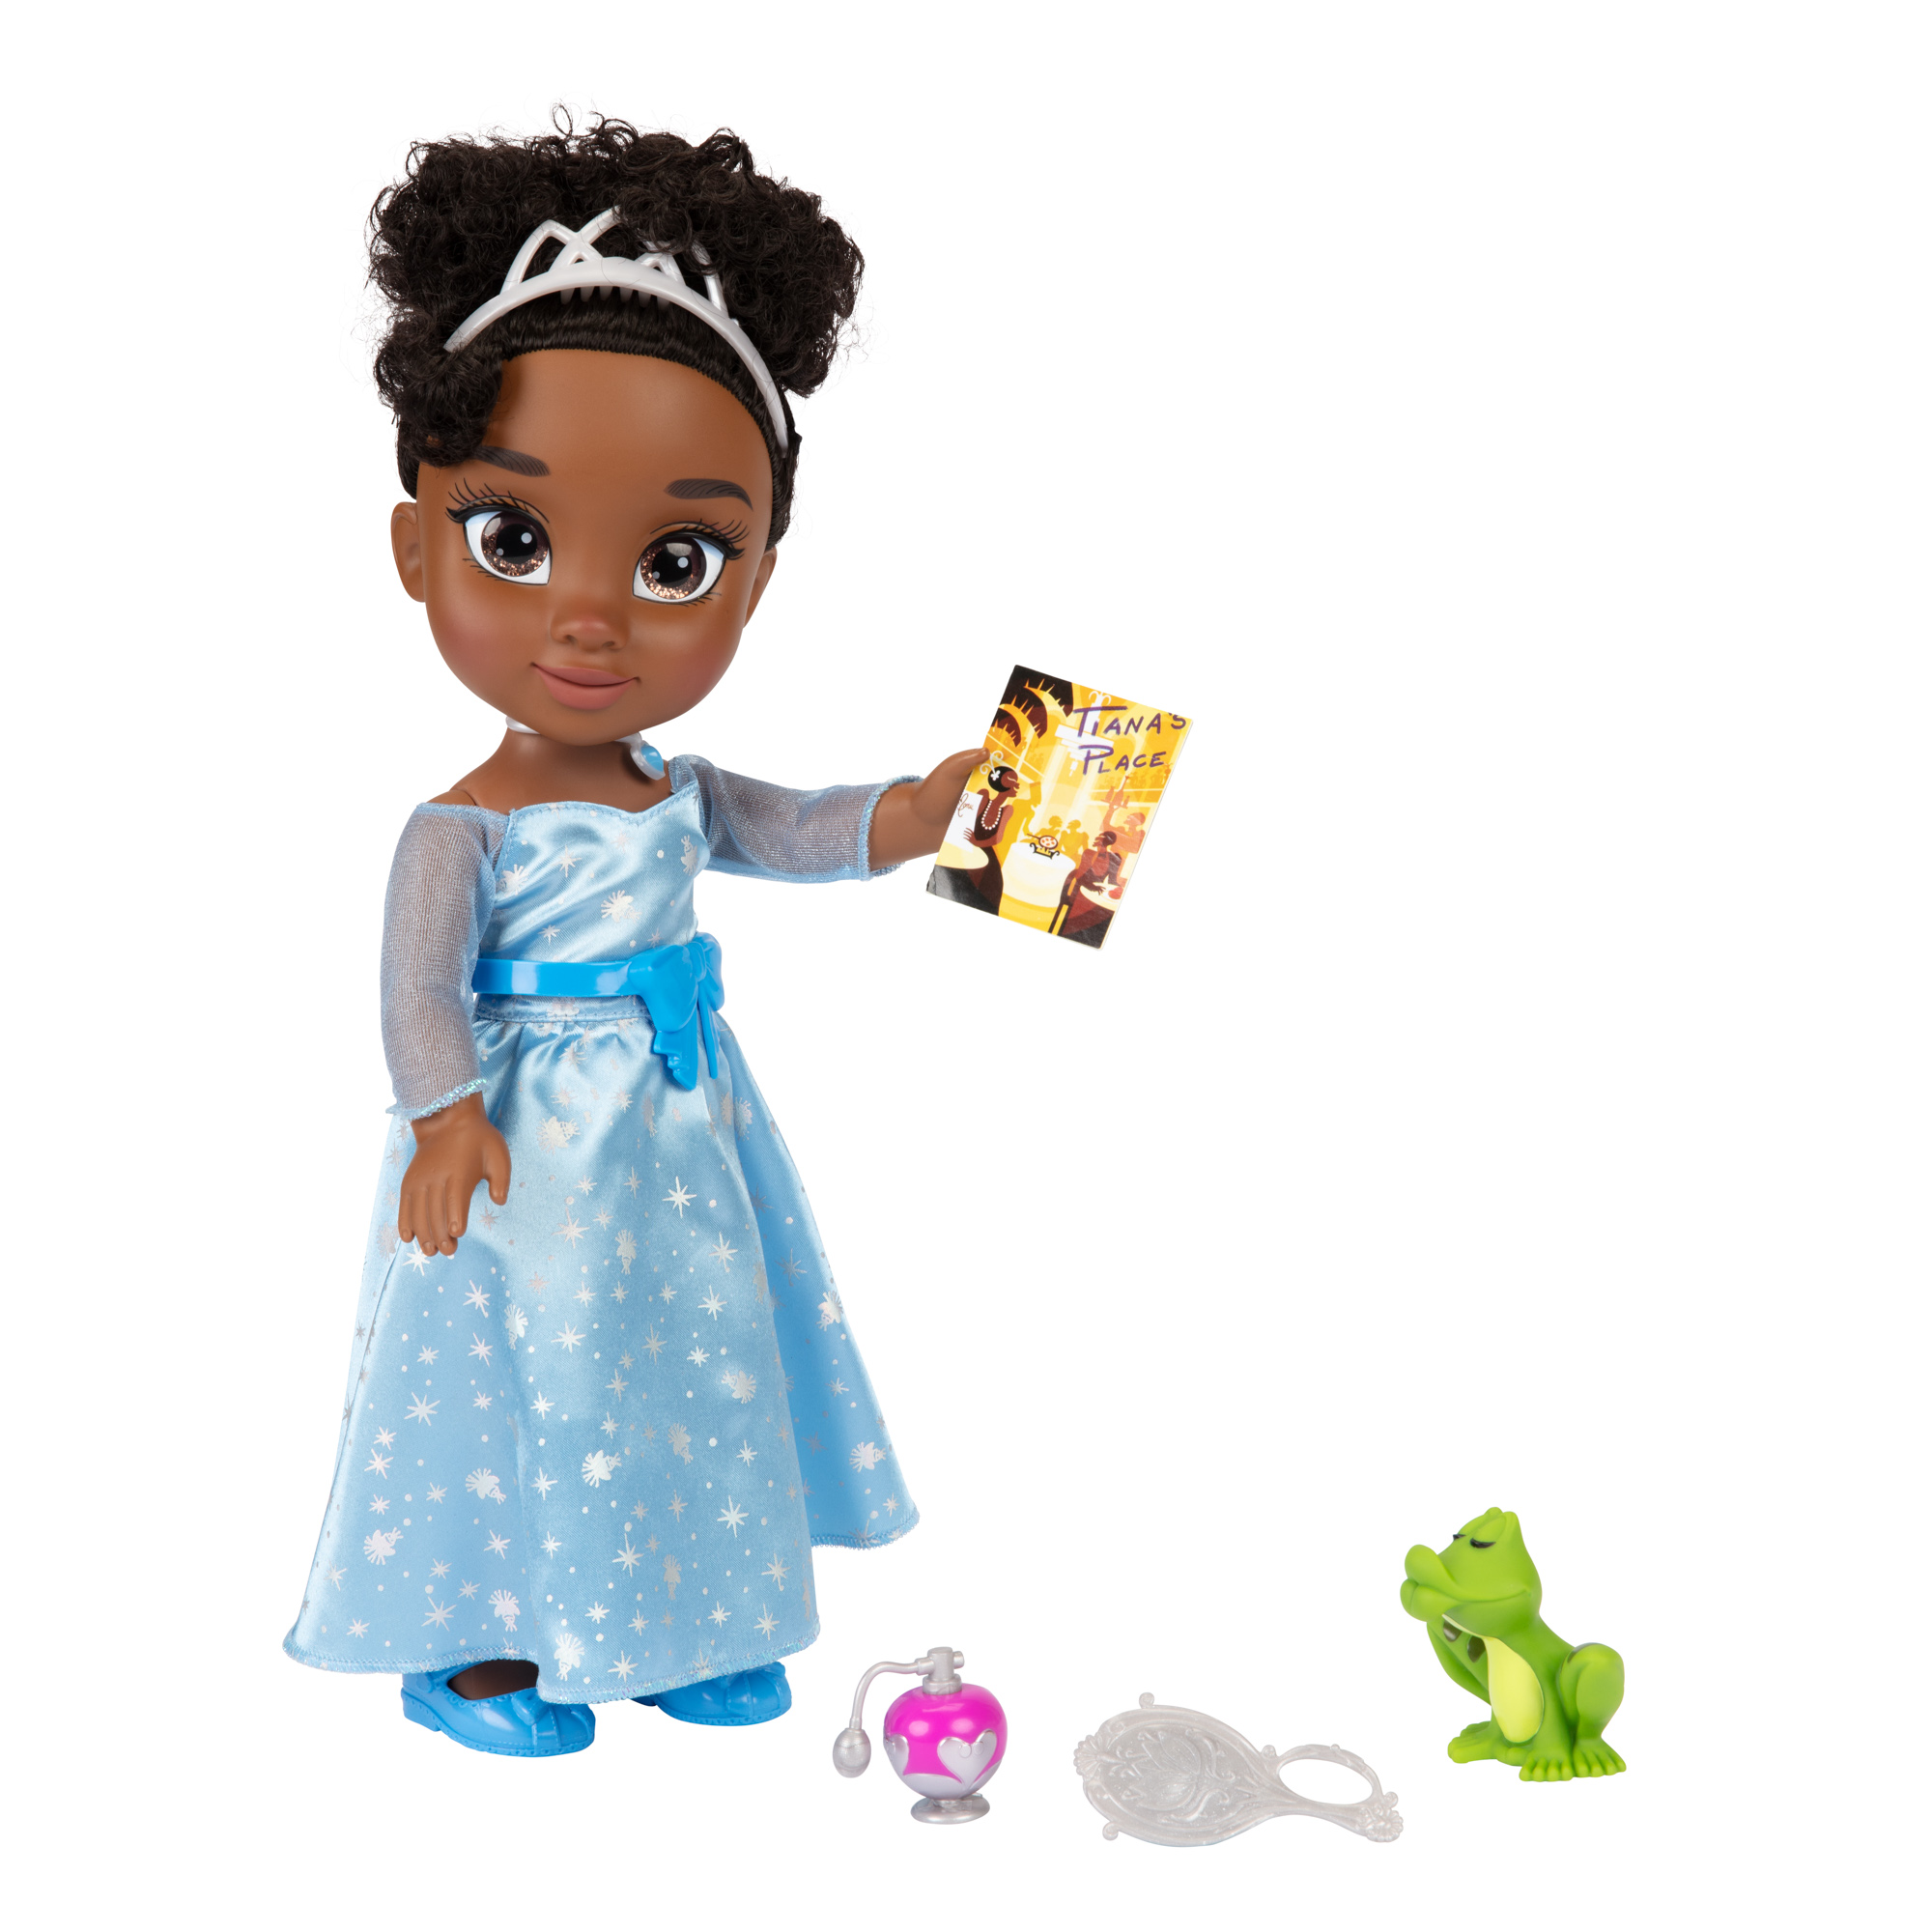 Disney Princess My Friend Rapunzel Doll – JAKKSstore